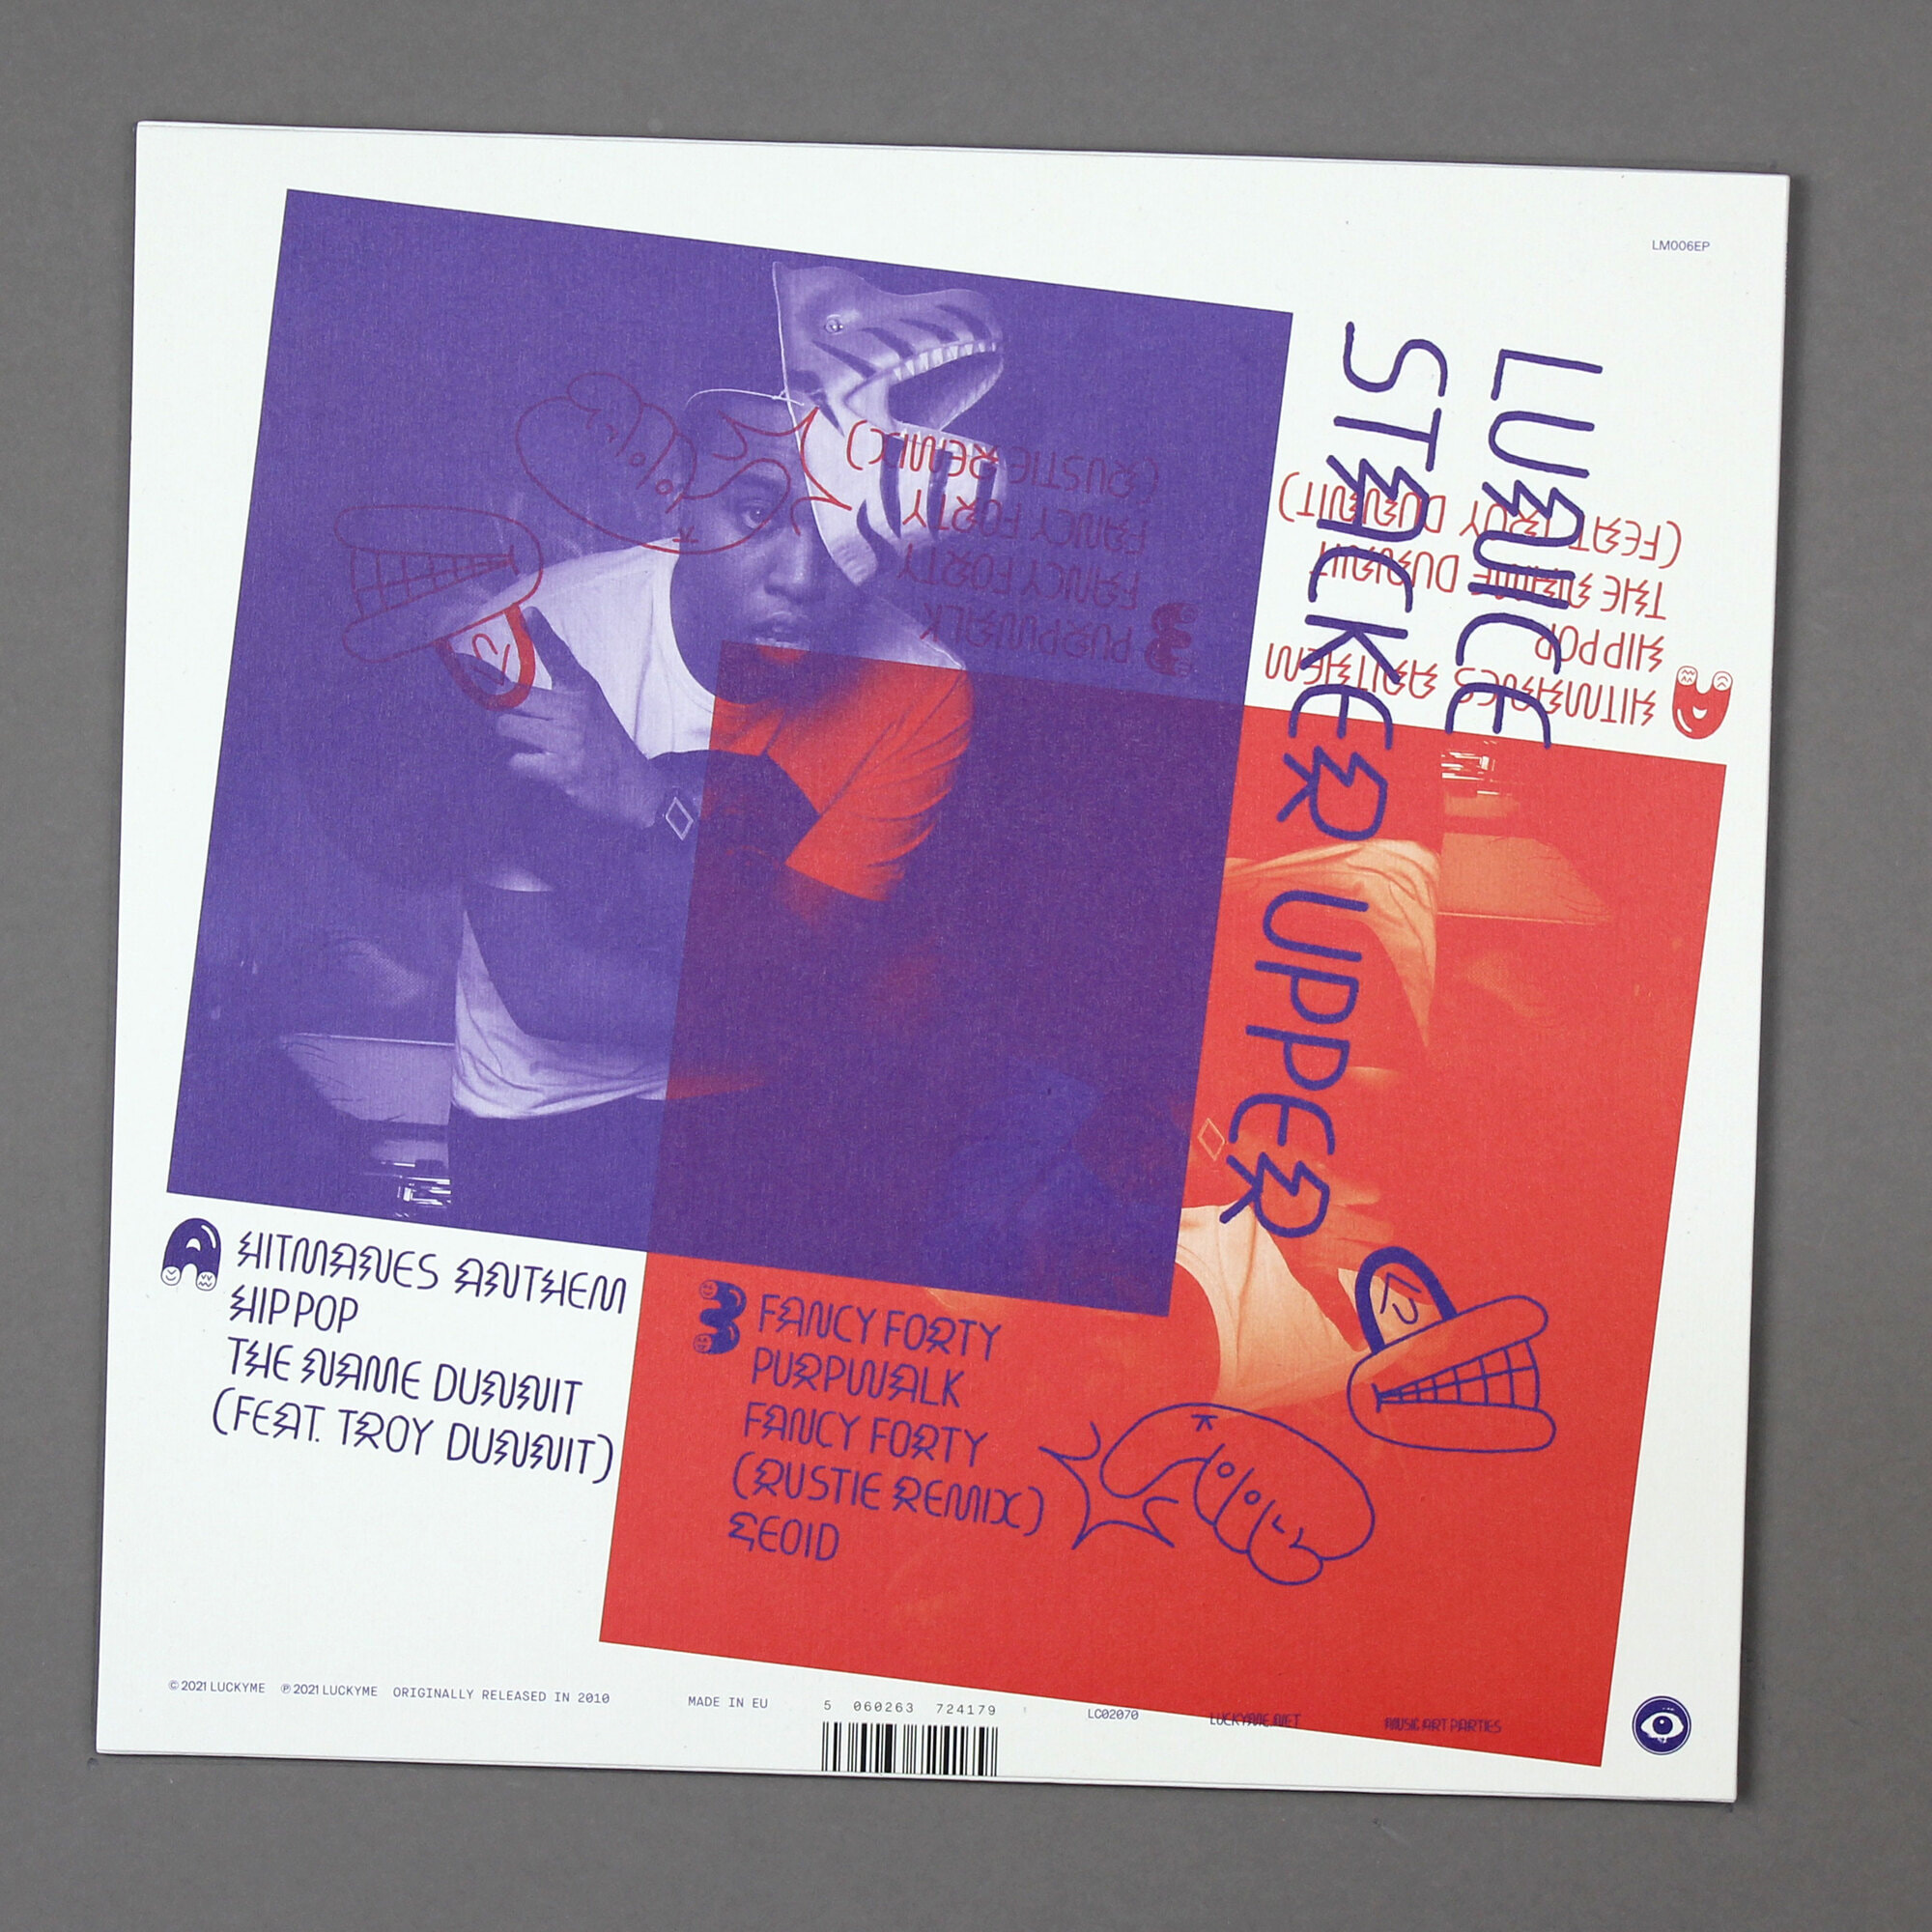 LUNICE (루니스) - Stacker Upper (EP) [블루 컬러 LP] 